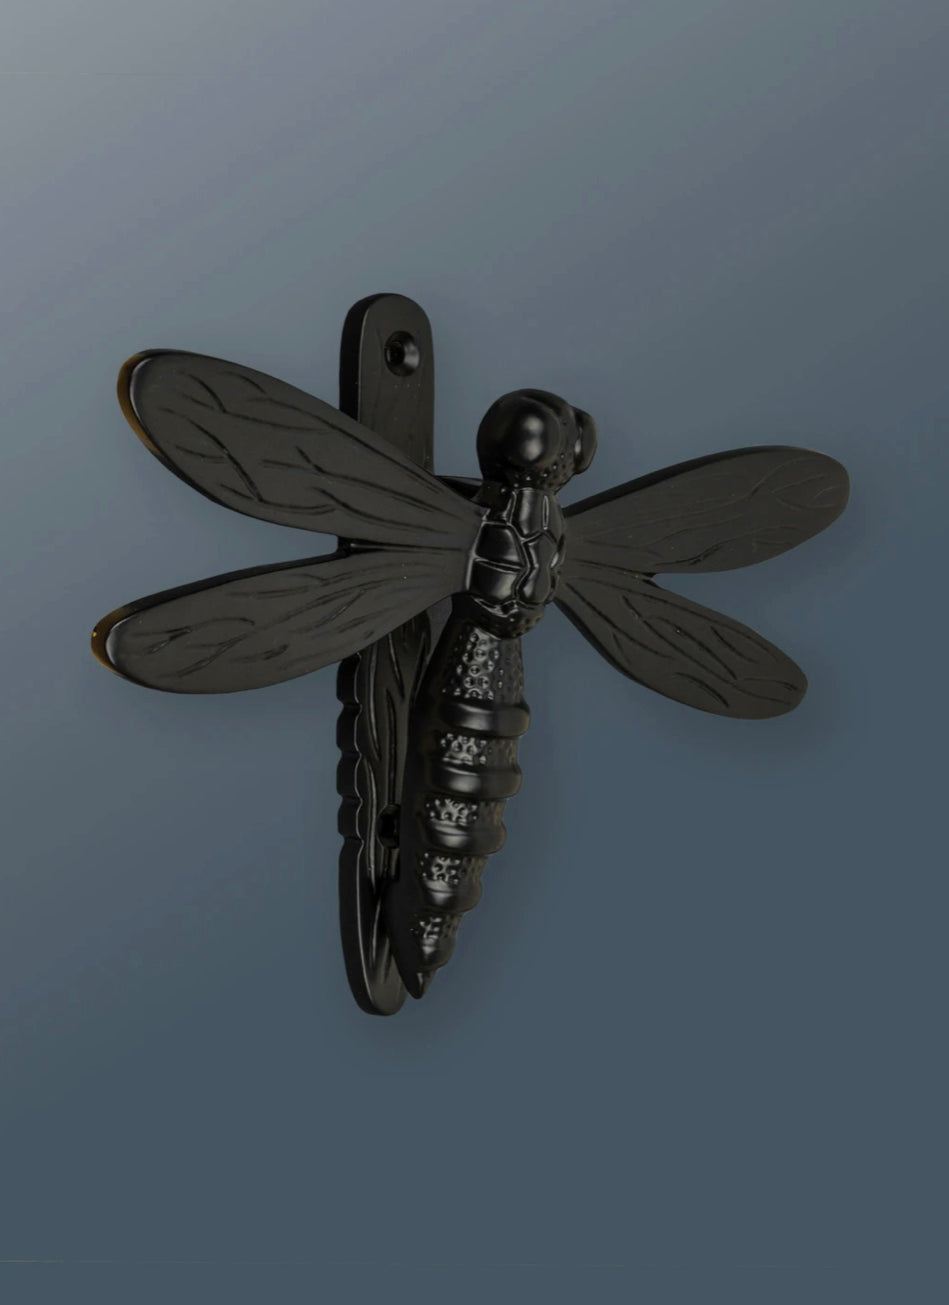 Brass Dragonfly door knocker - 3 colours